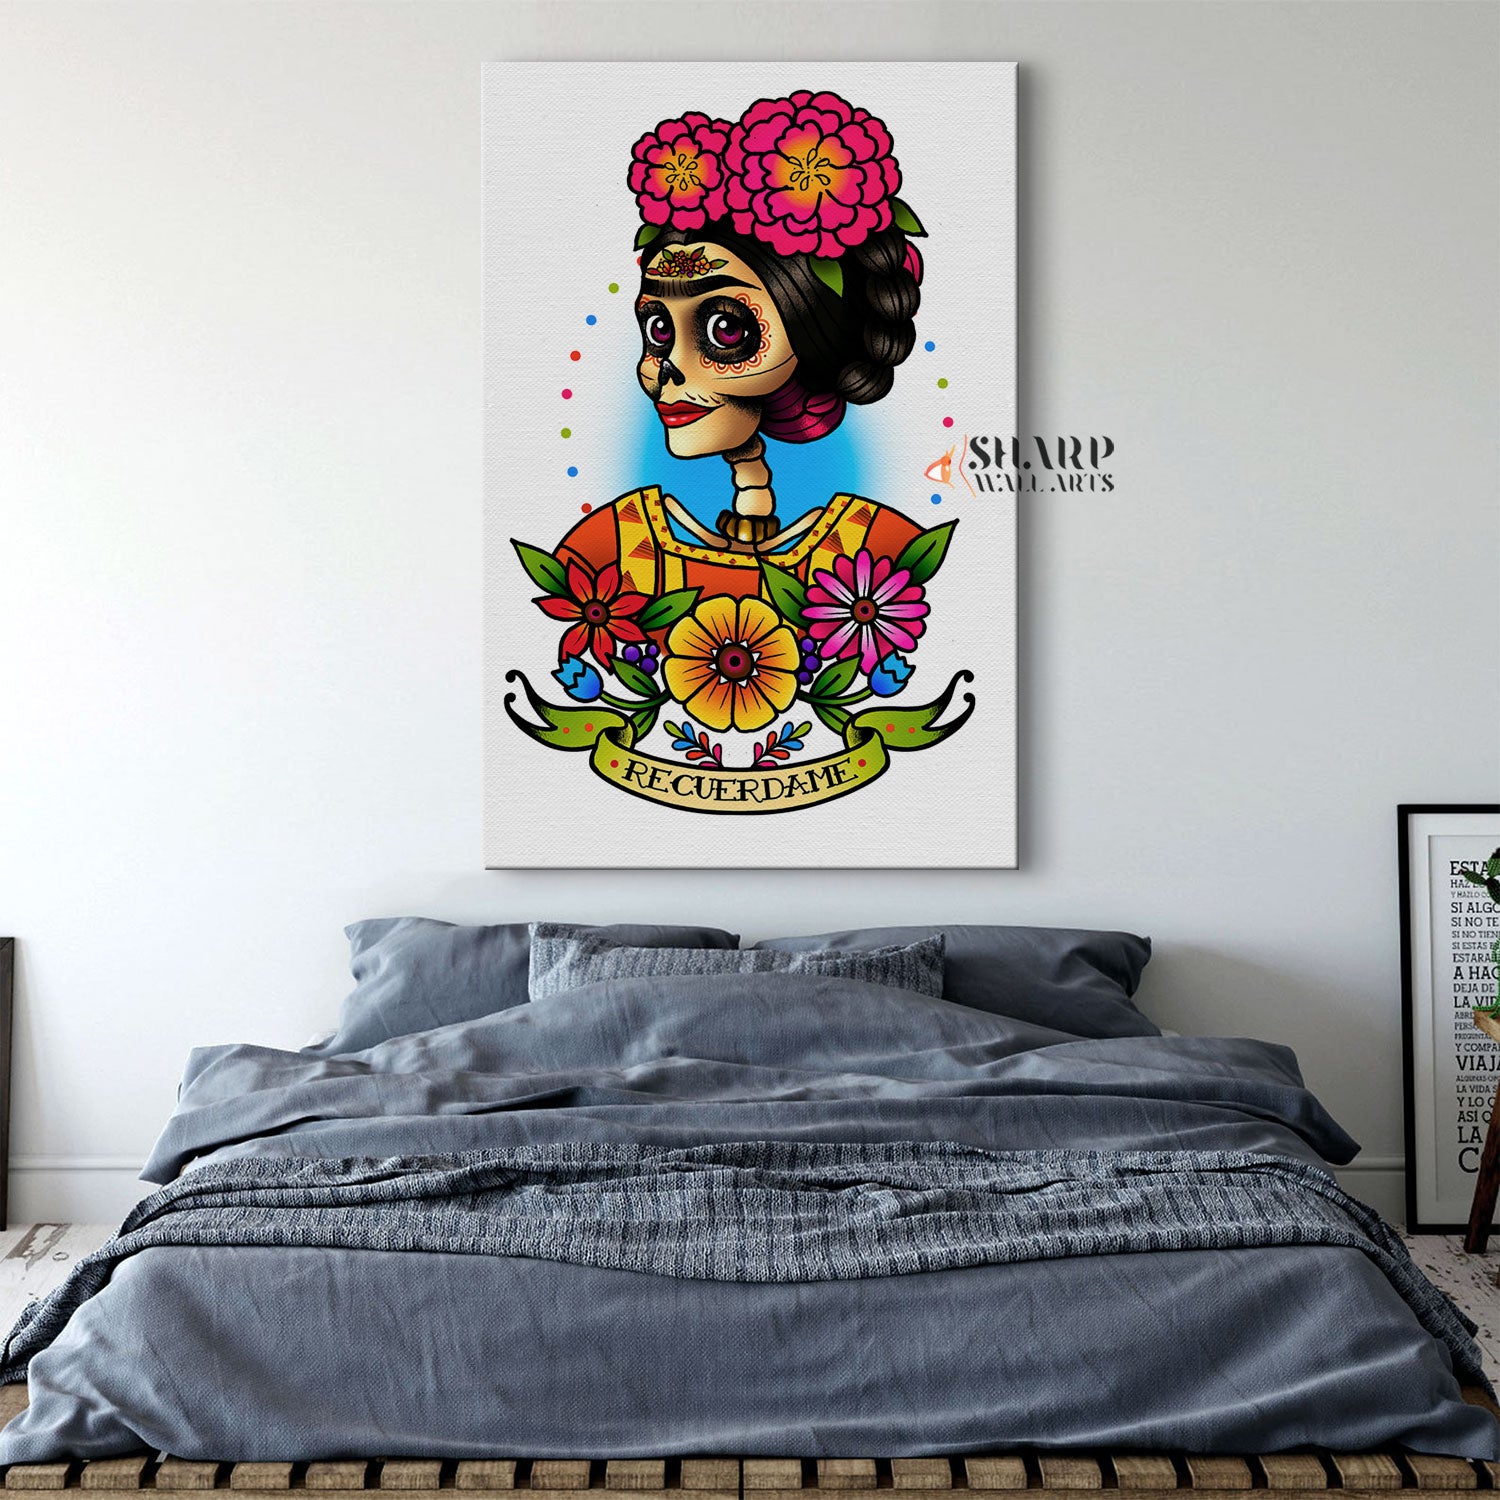 Frida Kahlo Recuerdame Canvas Wall Art